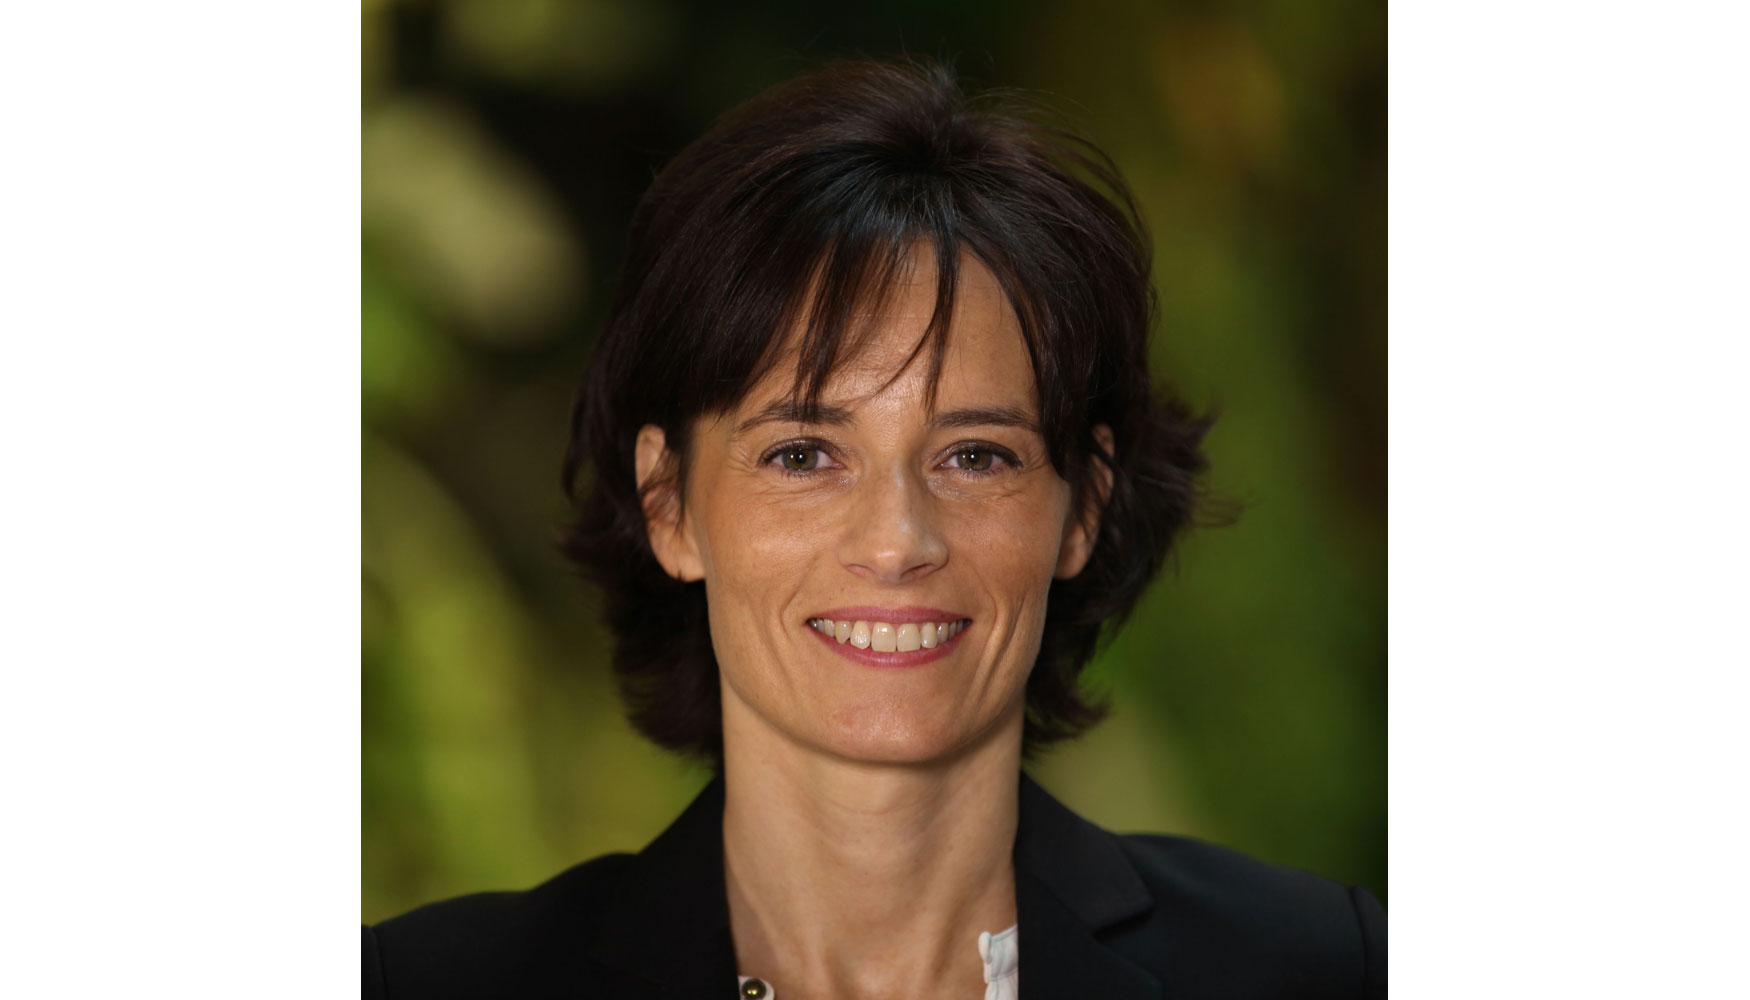 Isabelle Alfano, directora de Intermat